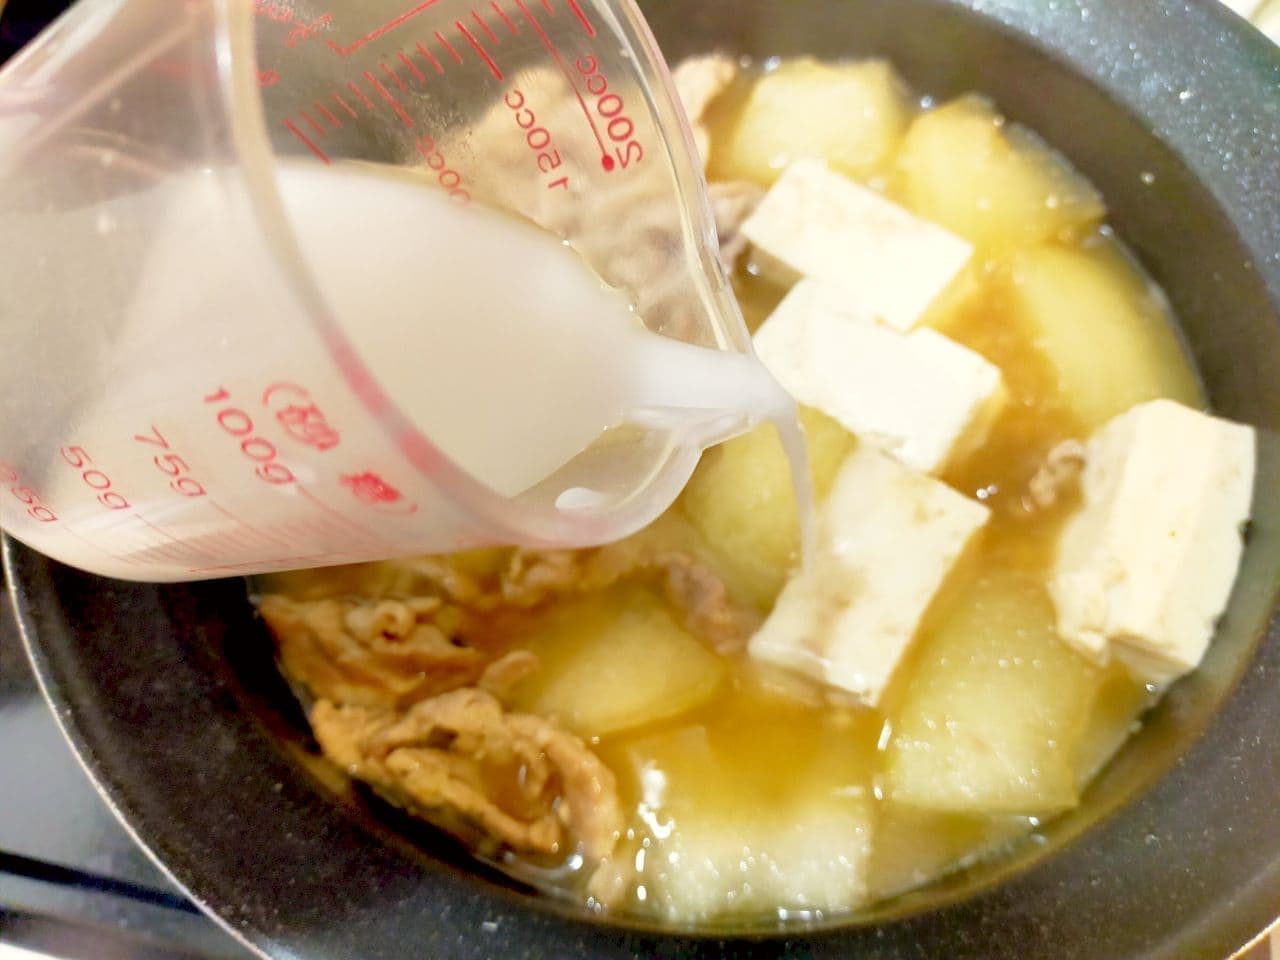 "Wax gourd tofu" recipe